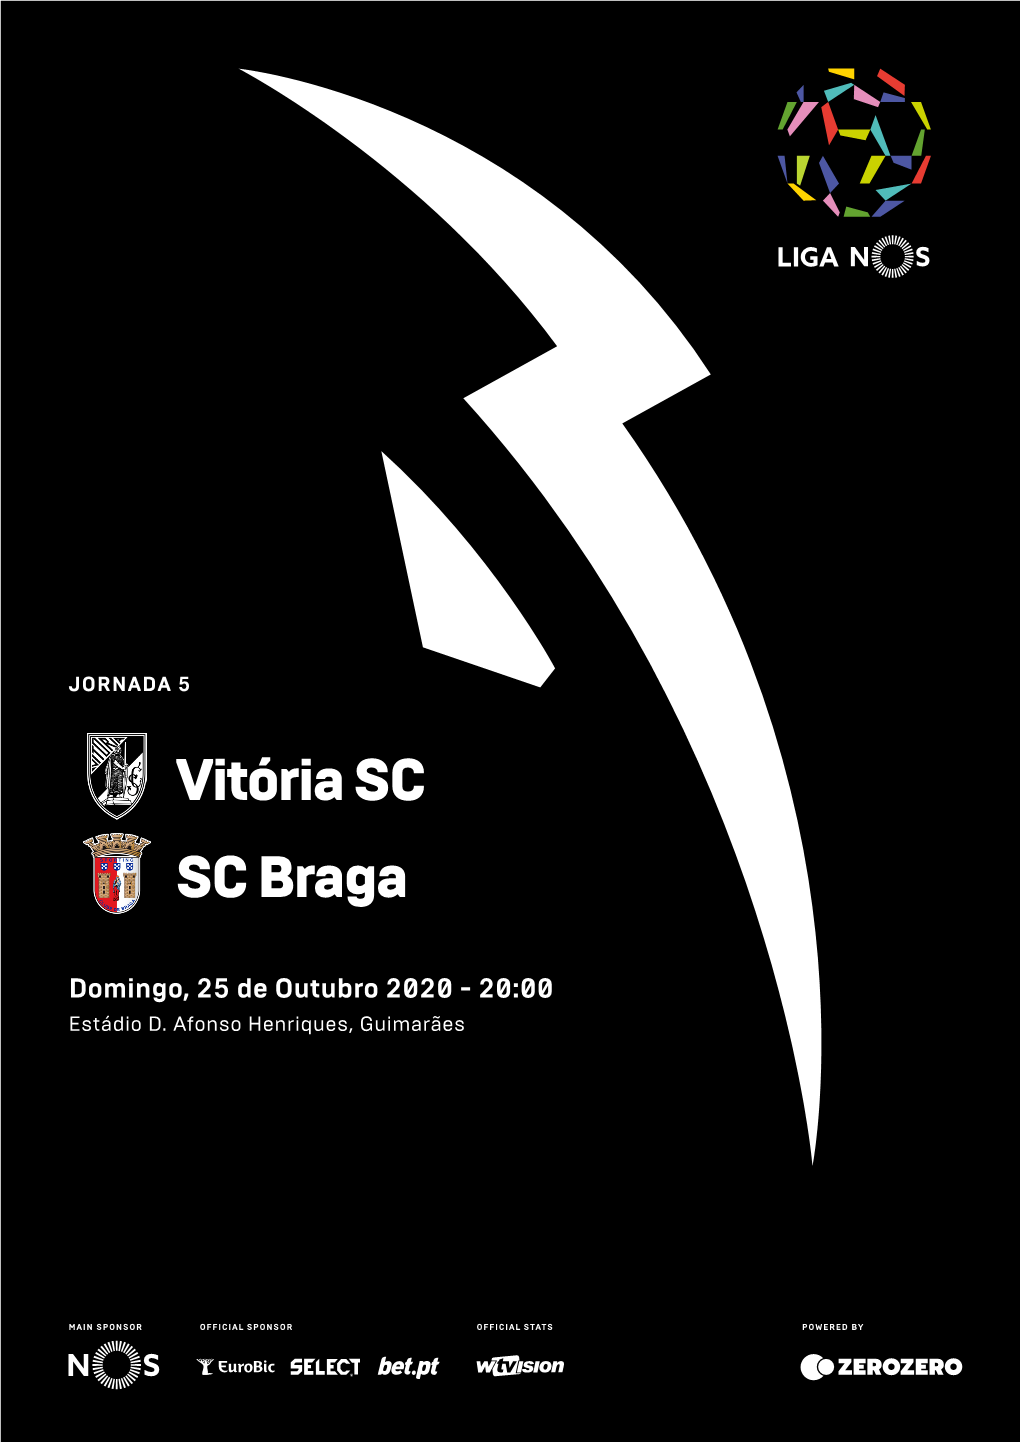 Vitória SC SC Braga